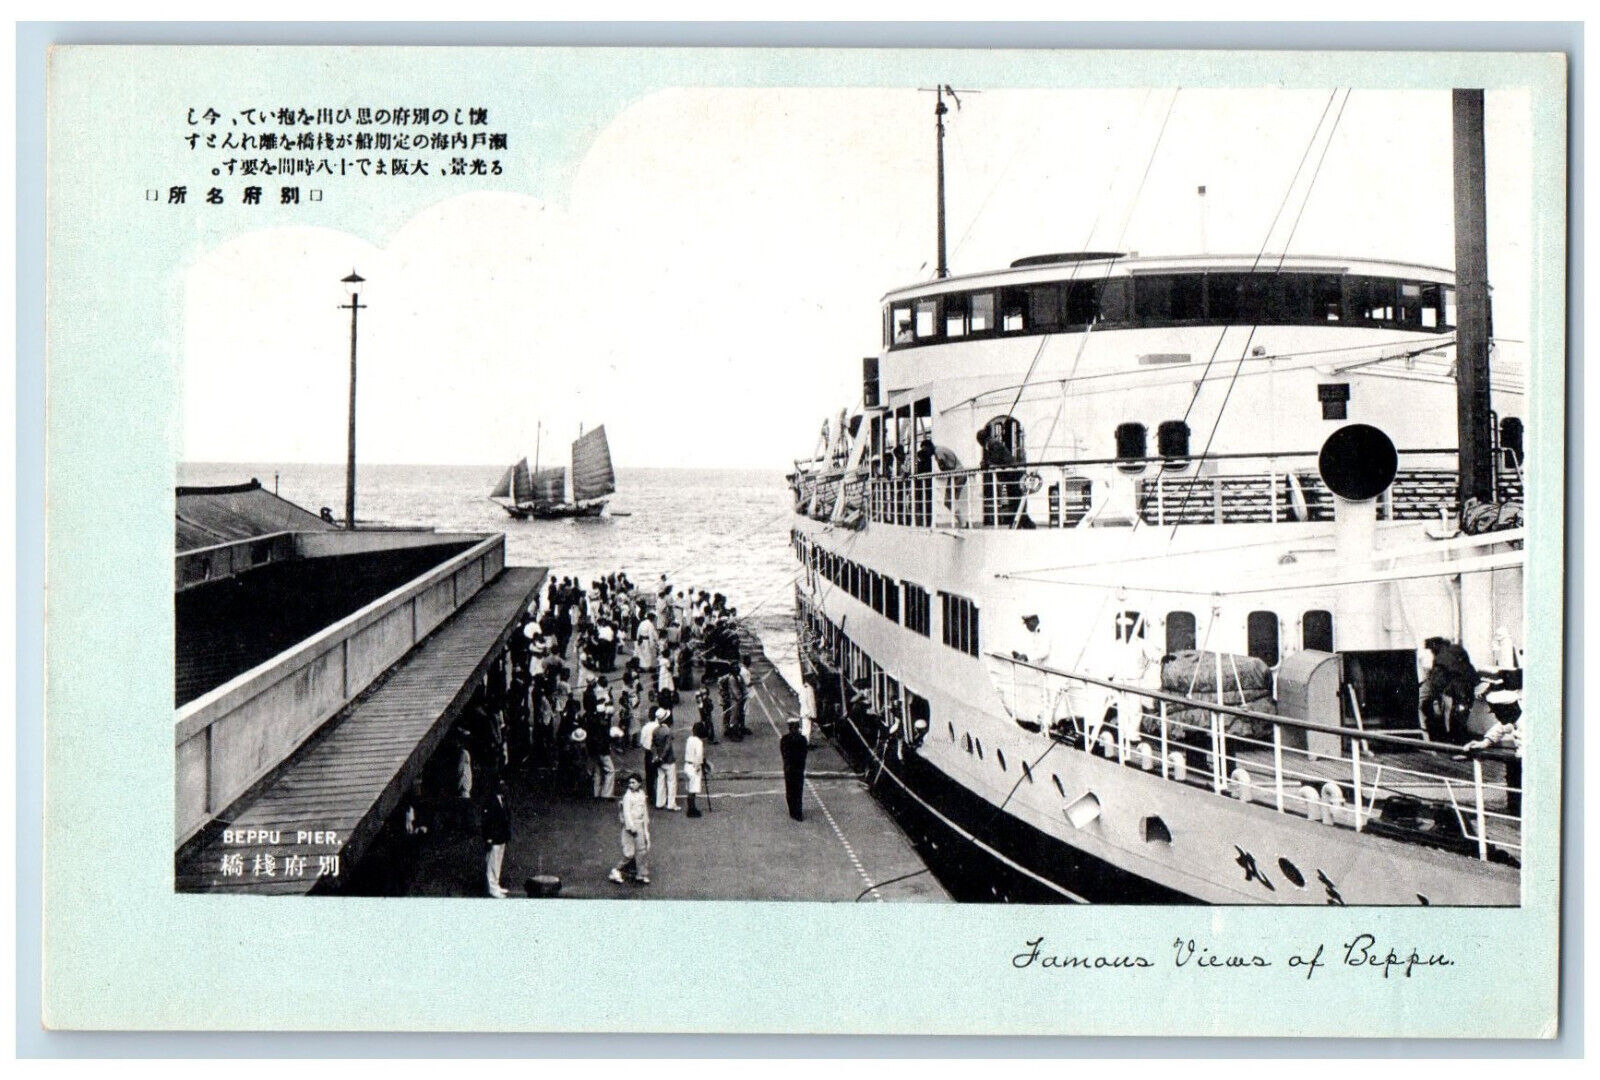 Kyushu Japan Postcard Pier Steamboat Famous Views of Beppu c1940's Vintage